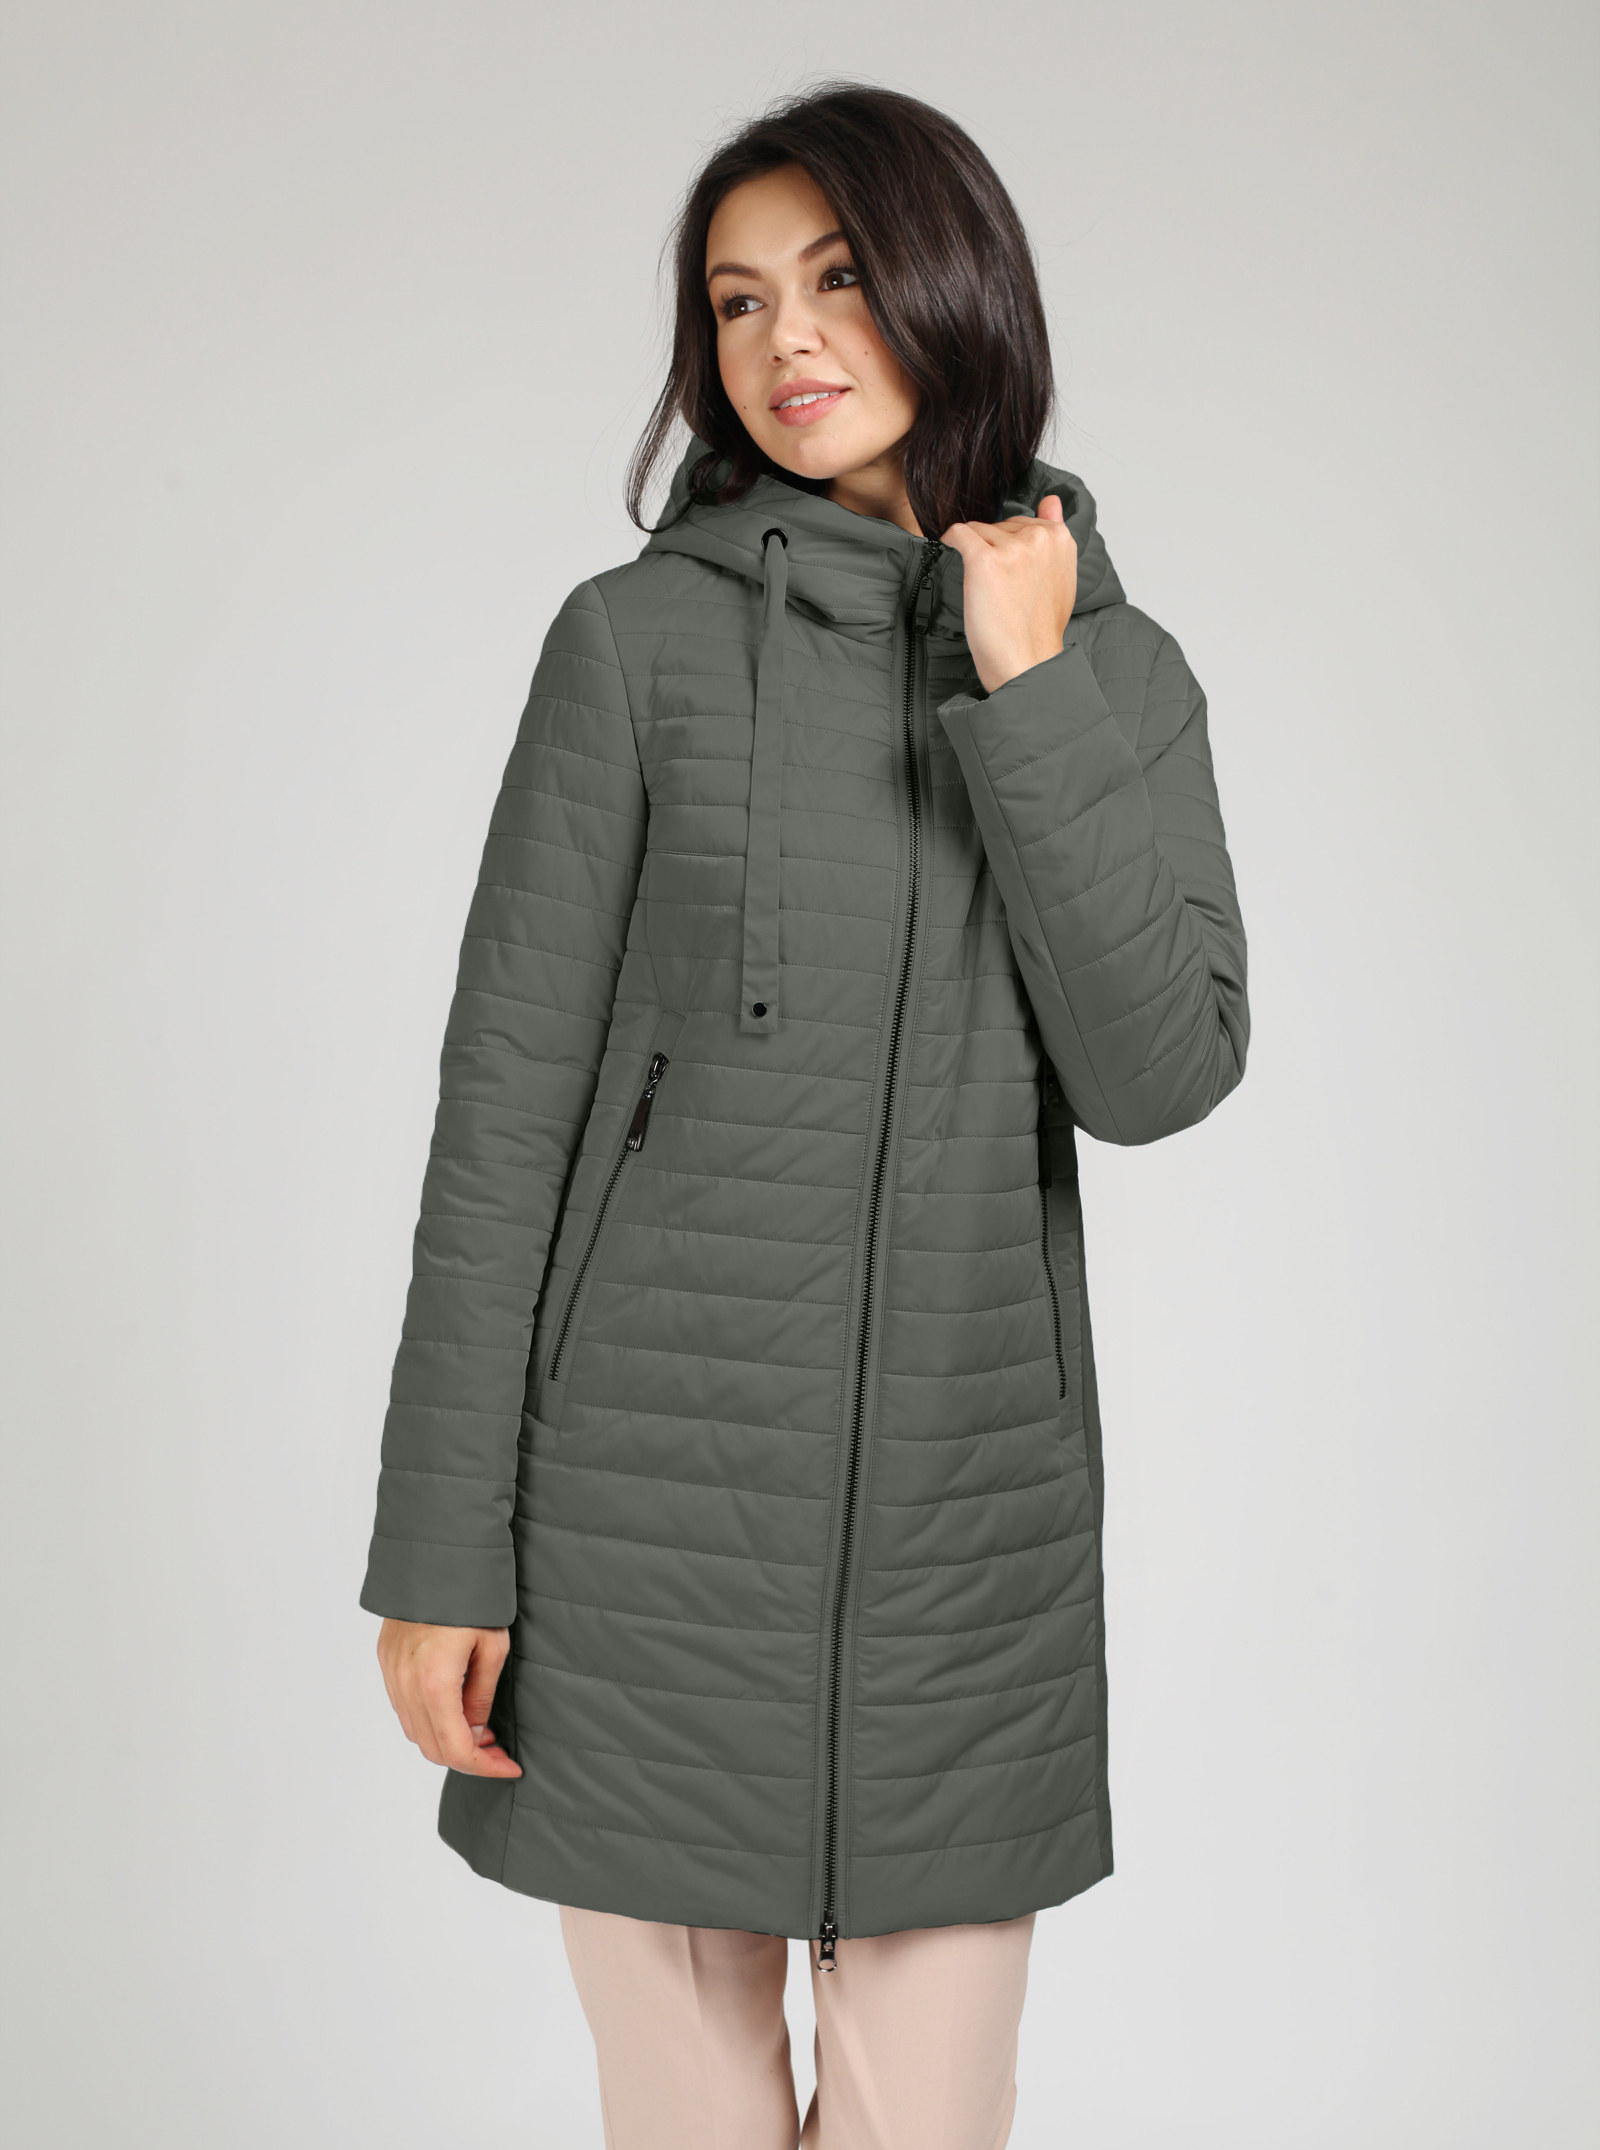 T4f w95*60.02 (701-2) пальто утепленное жен